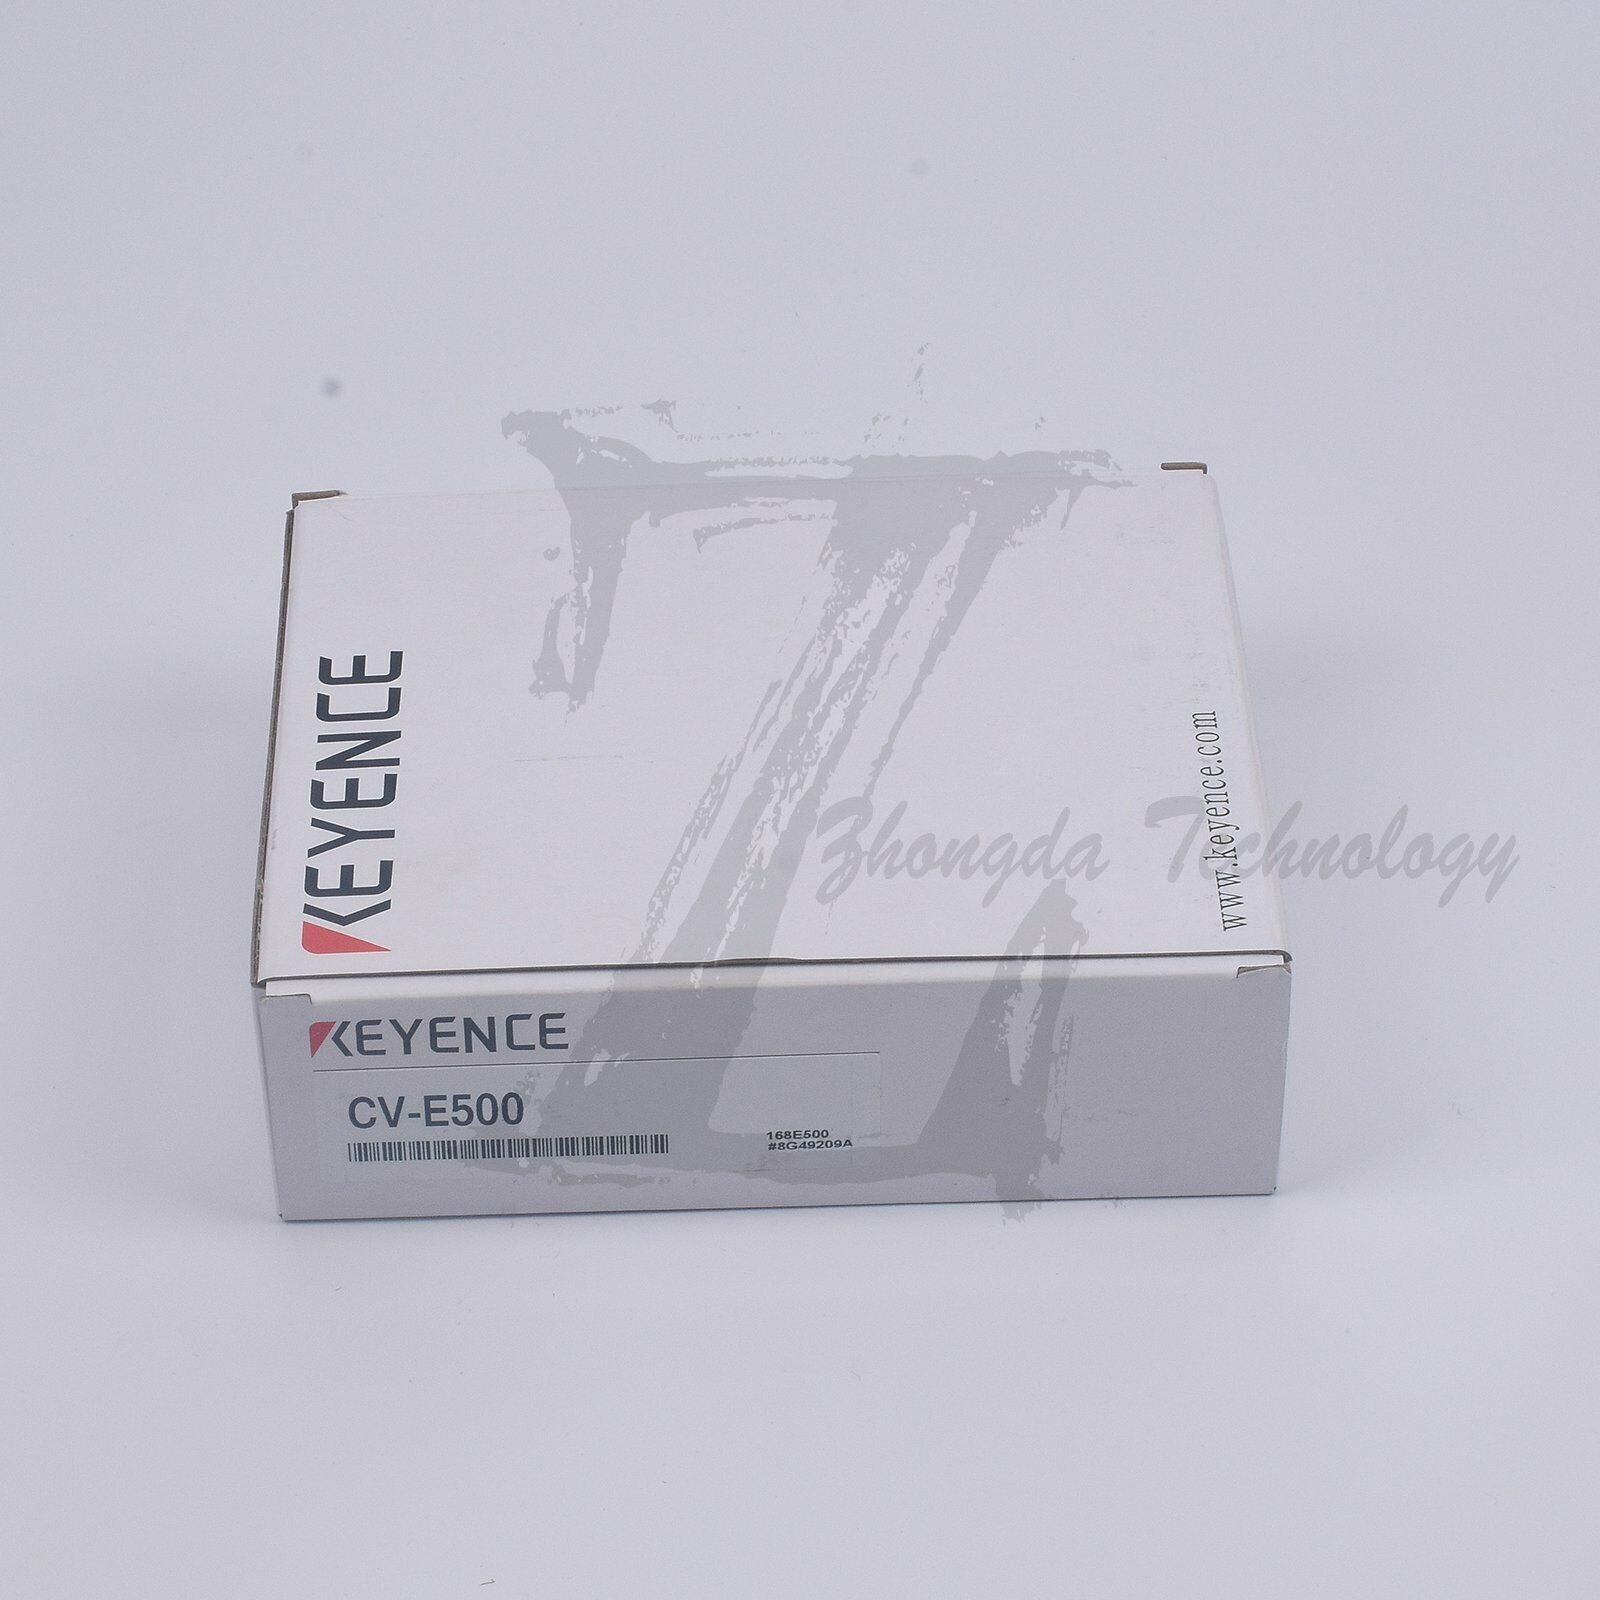 1PC Keyence Expansion Unit CV-E500 CVE500 New in box One year warranty KOEED 500+, import_2020_10_10_031751, Keyence, NEW, Other